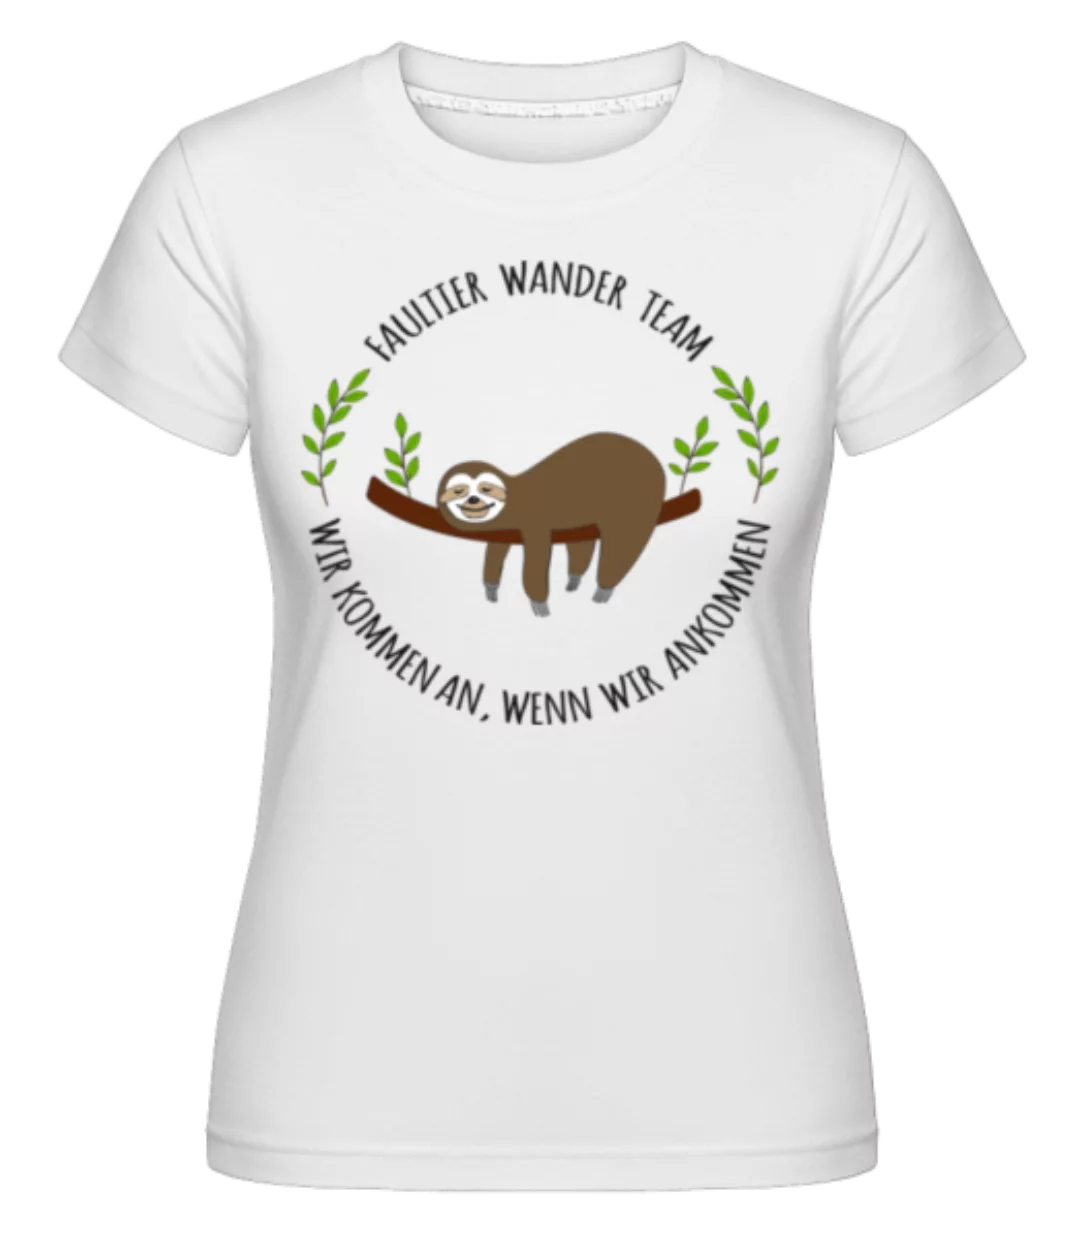 Faultier Wander Team · Shirtinator Frauen T-Shirt günstig online kaufen